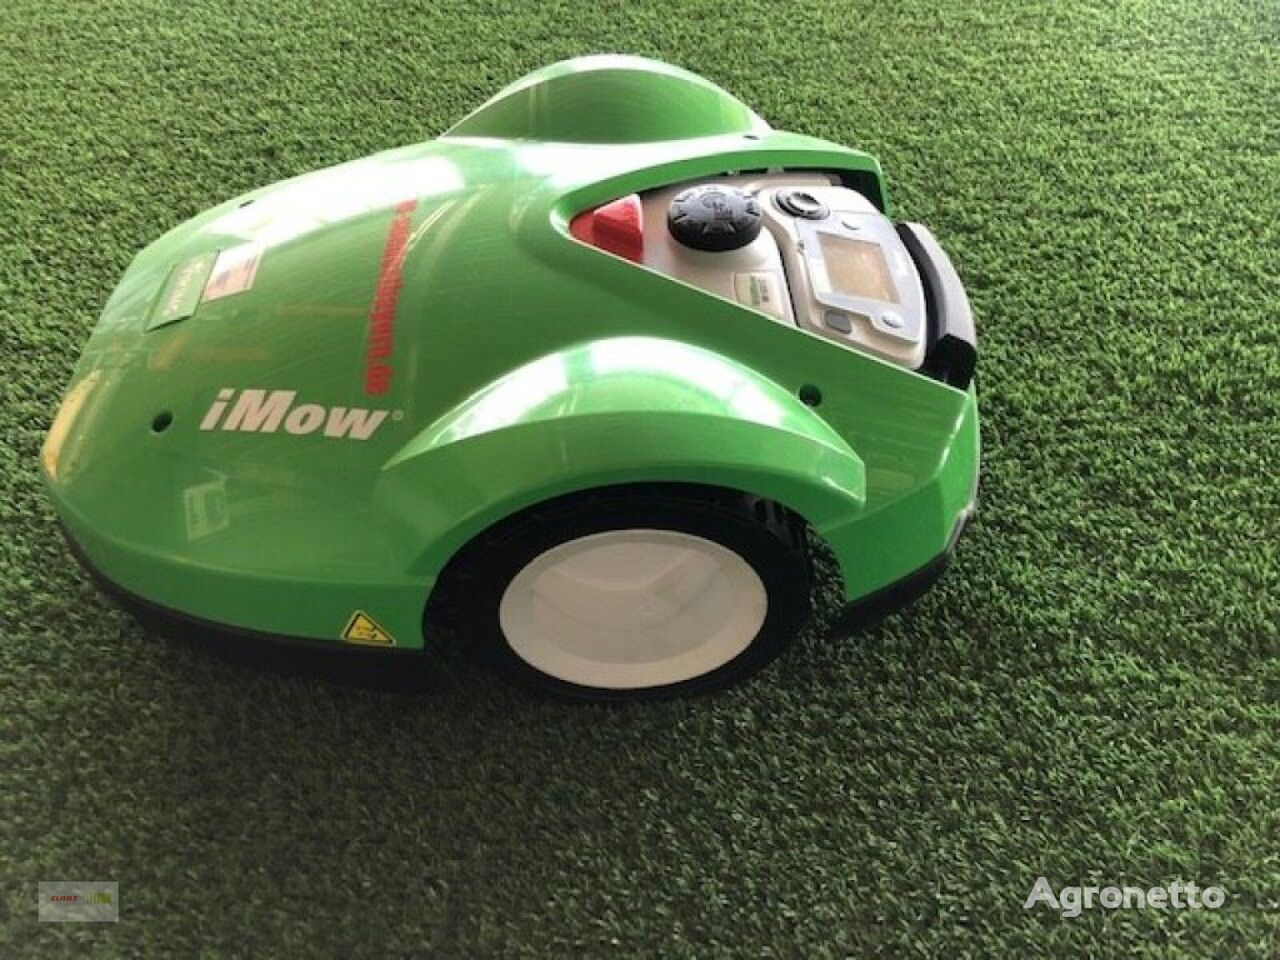 VIKING iMow 632 C robot lawn mower